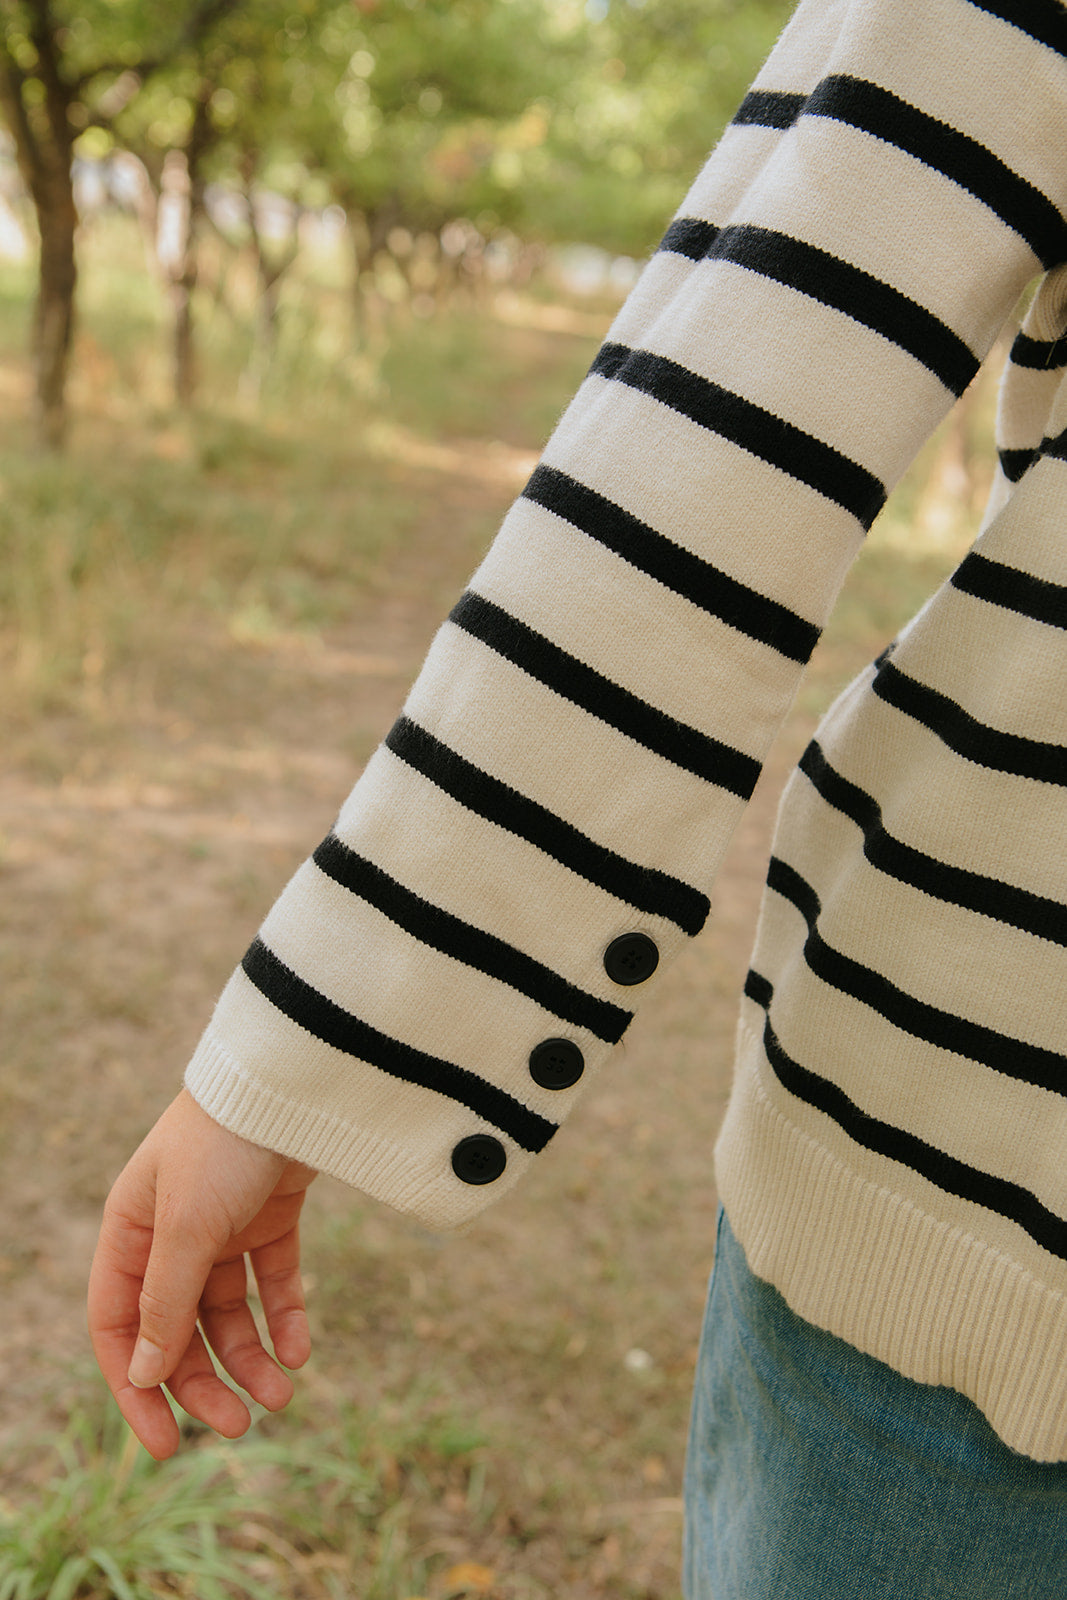 Marley Striped Sweater